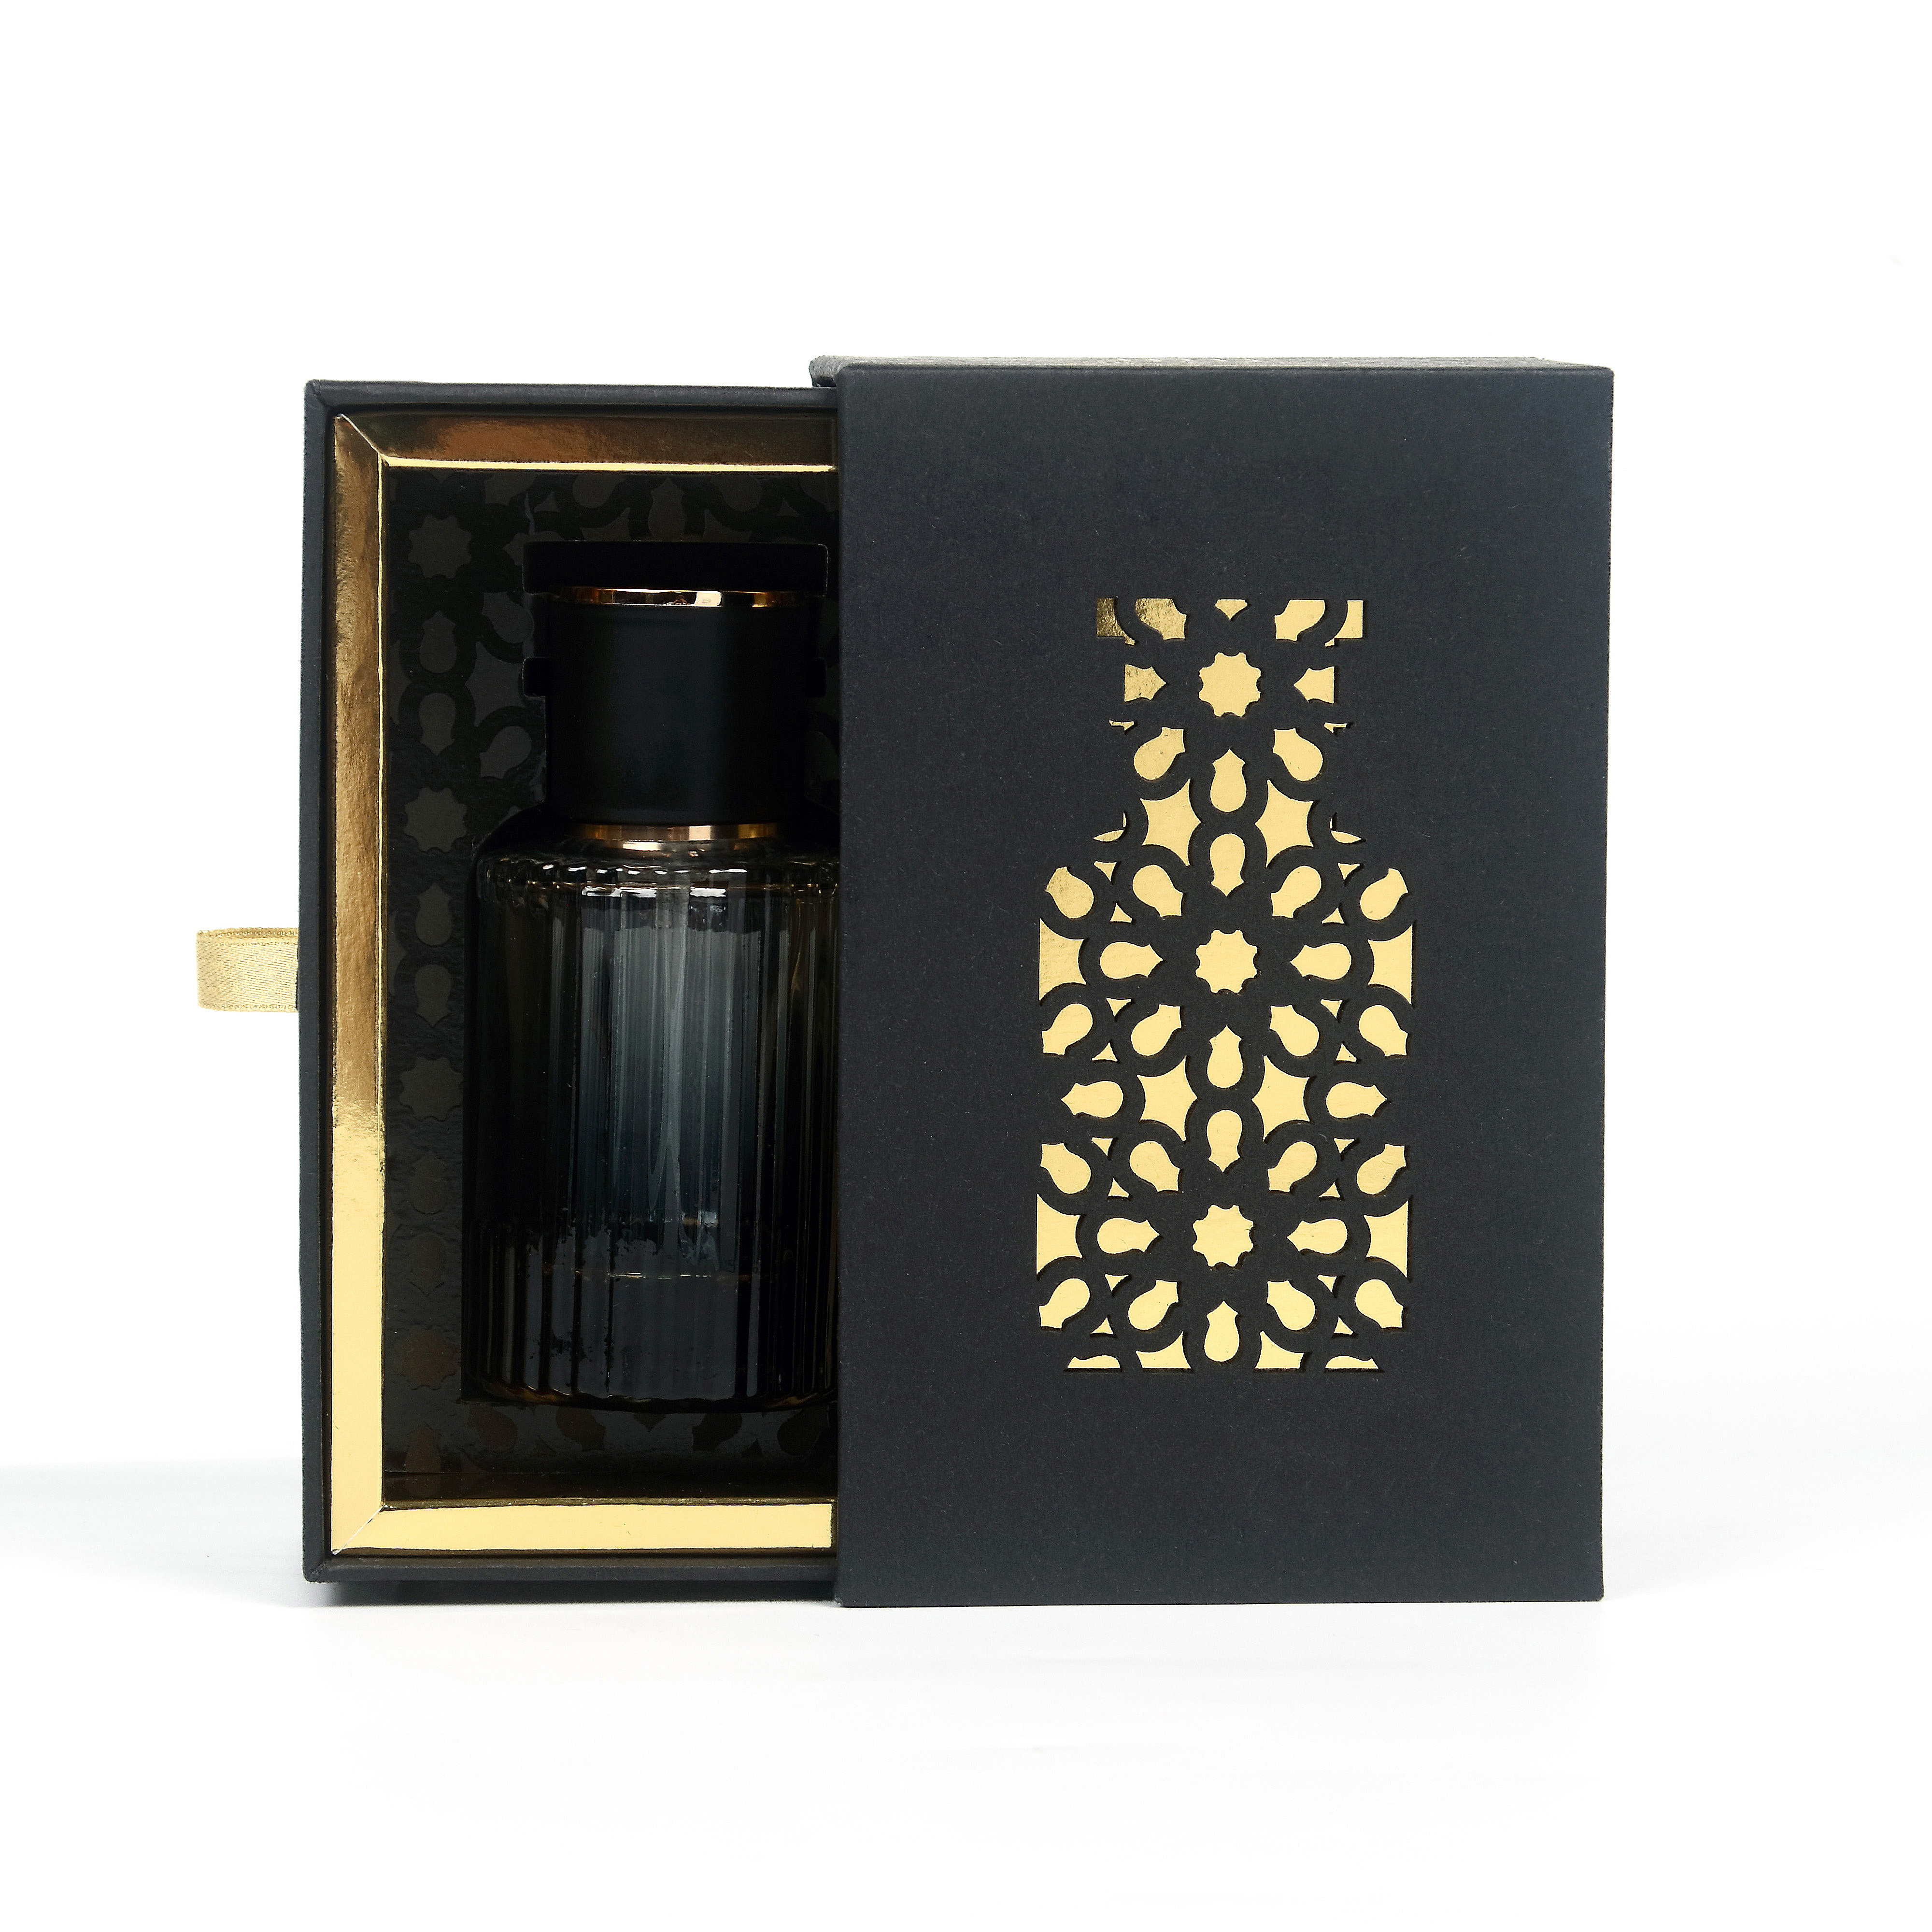 Customers' Perceptions of Custom Perfume Gift Boxes